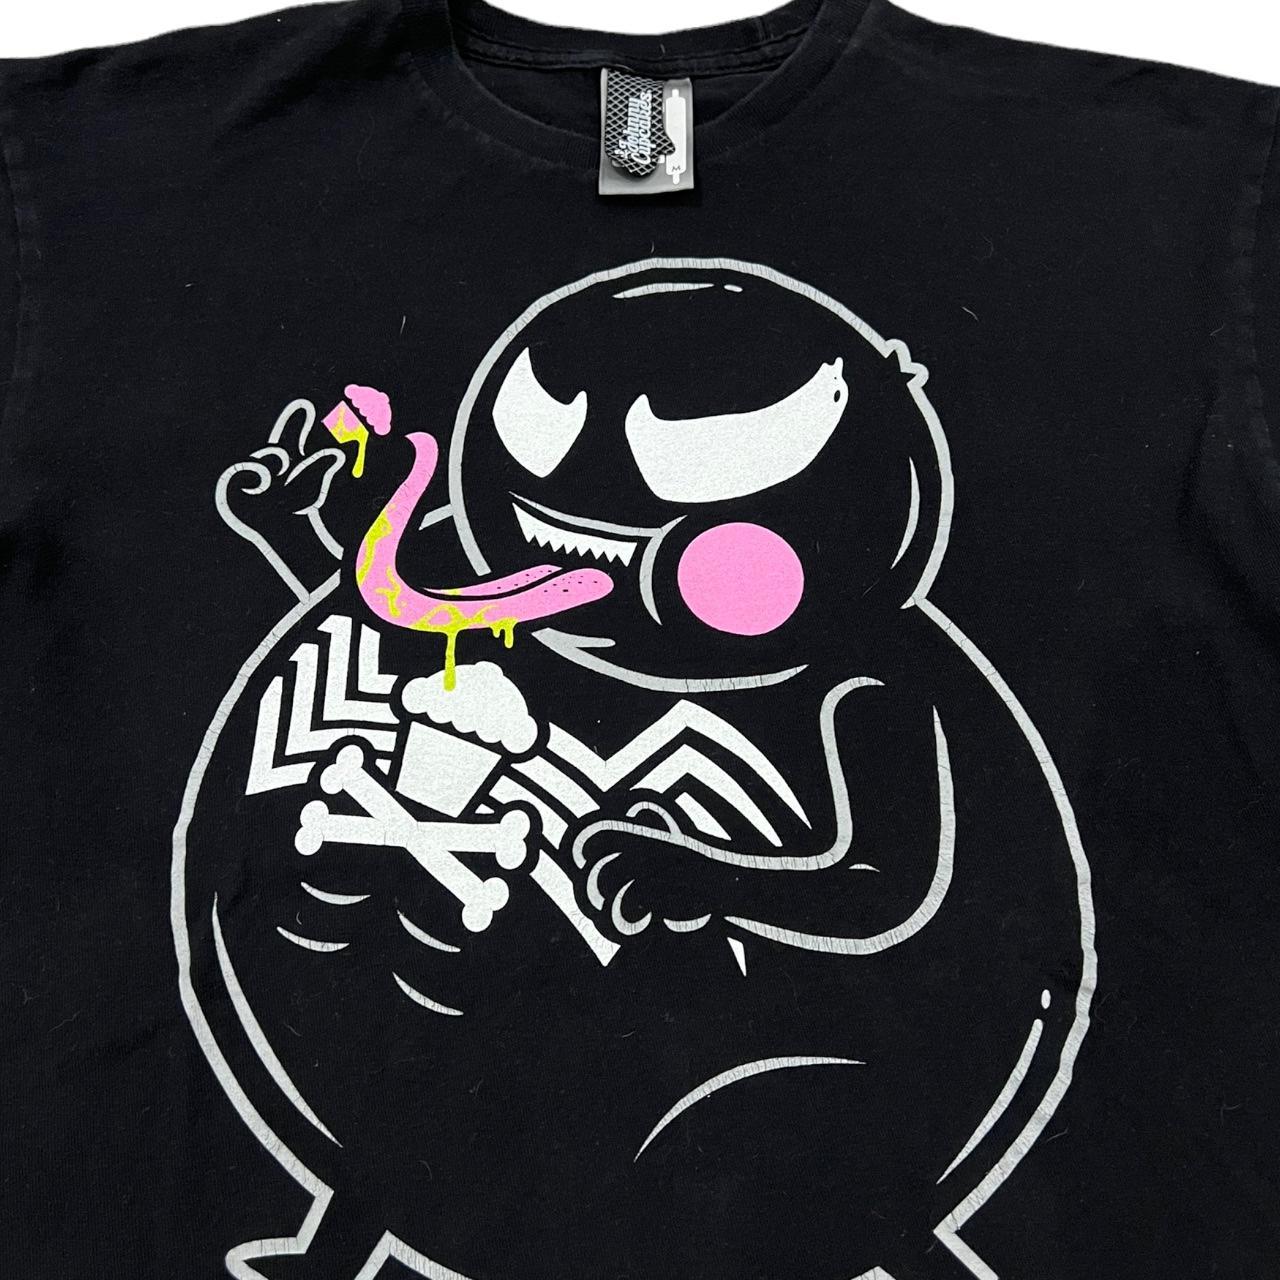 Product Image 3 - Johnny Cupcakes Venom T-Shirt
Size: M